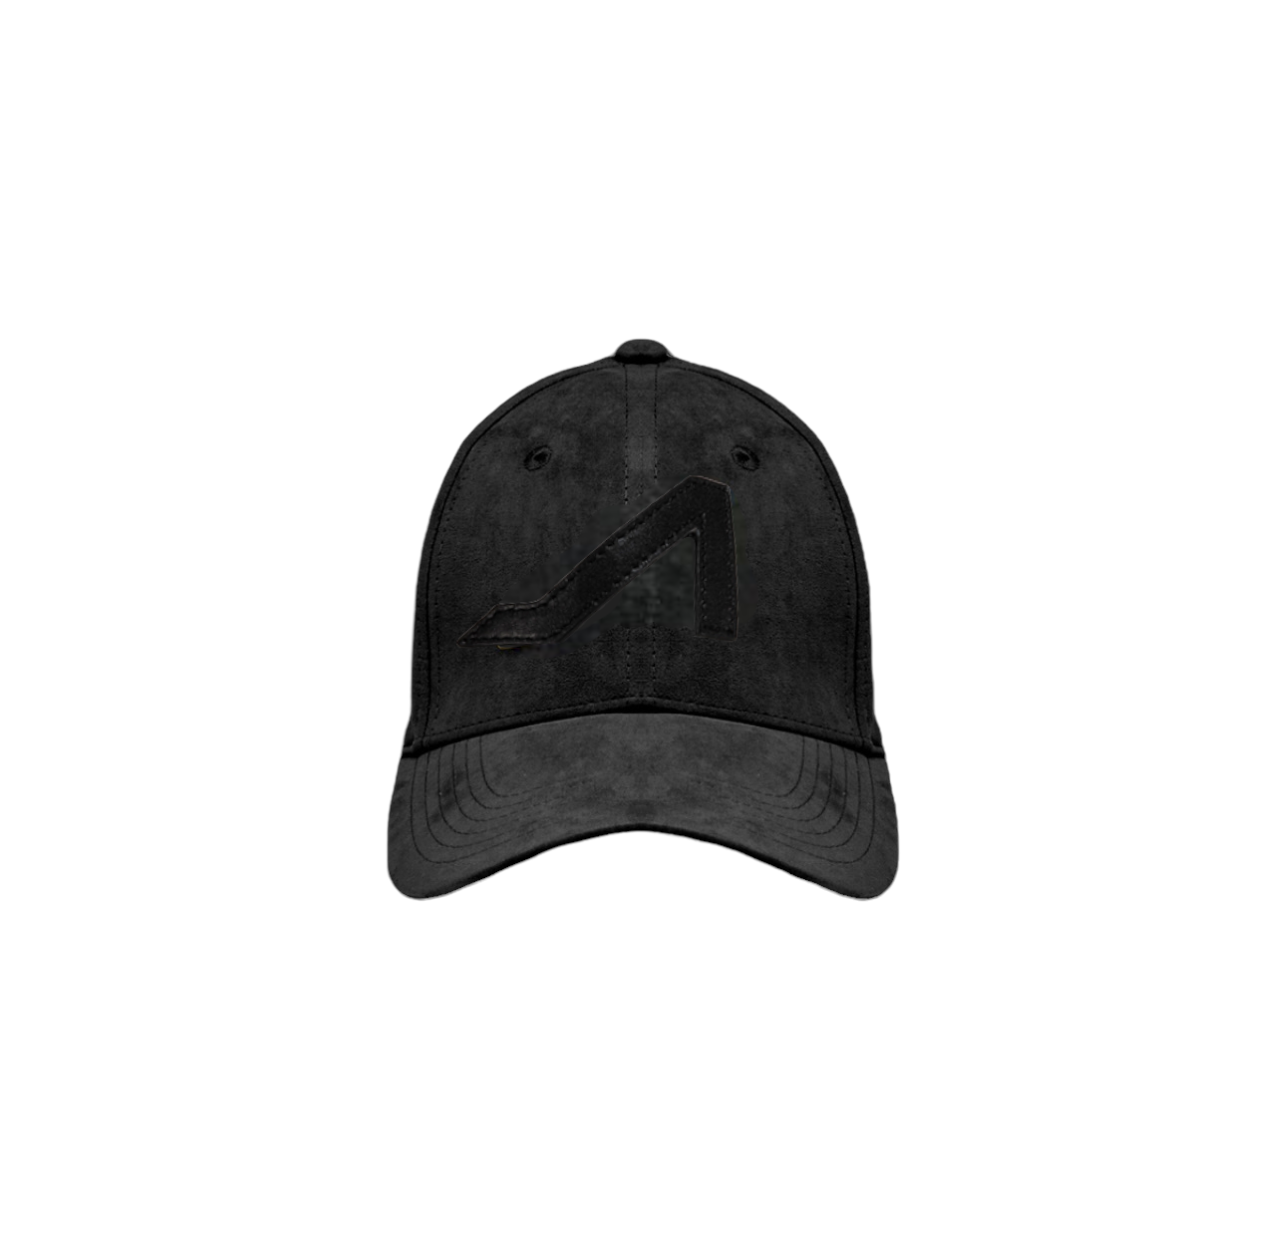 Black ultra suede hat with black logo